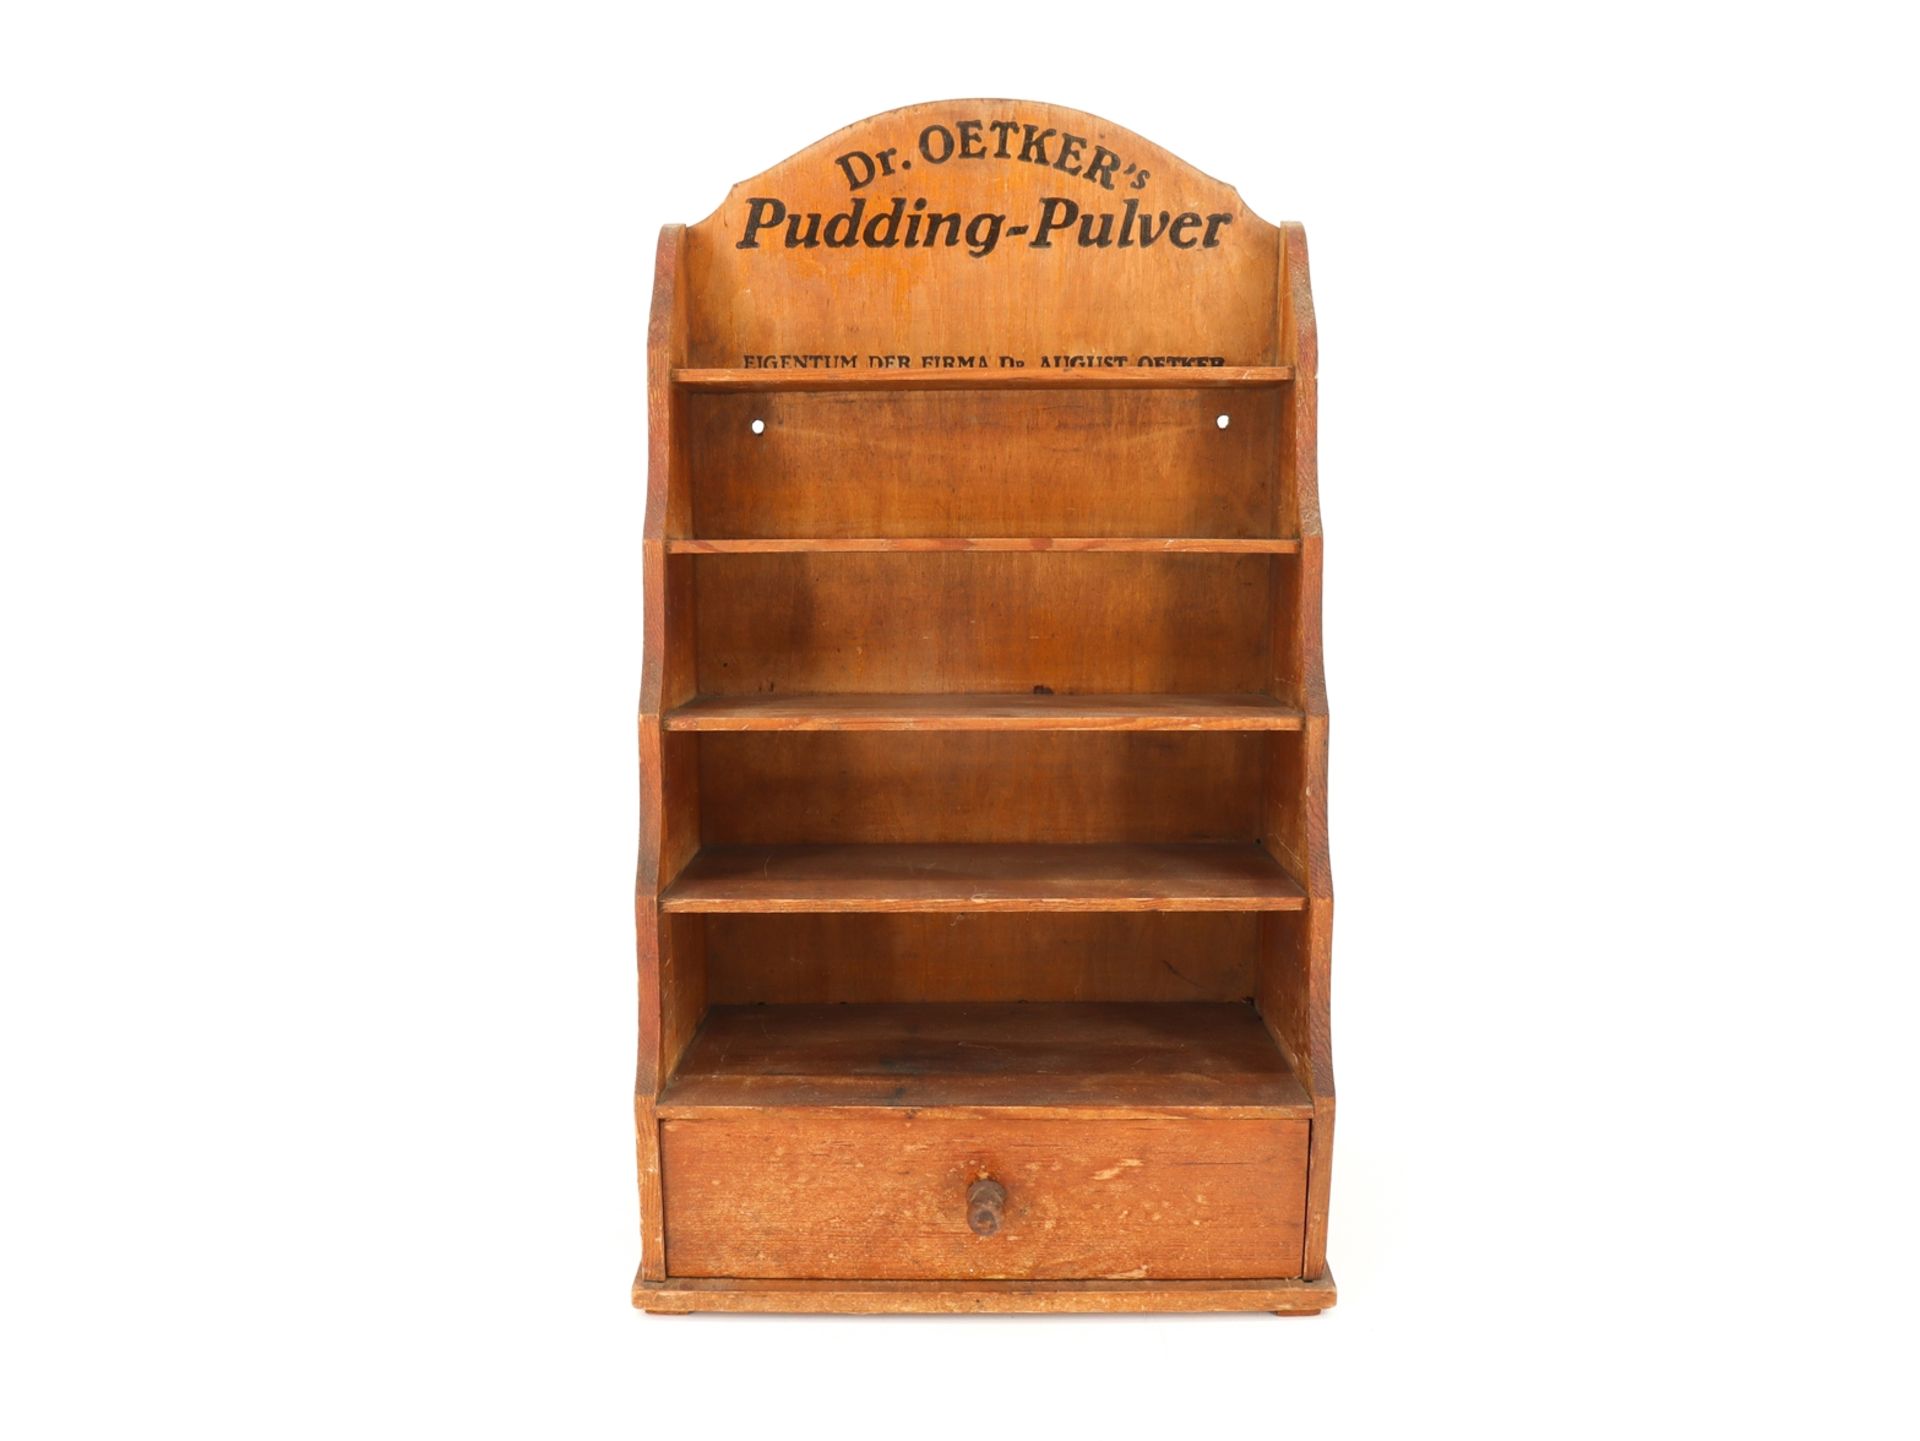 Dr Oetker pudding powder sales cabinet, Bielefeld around 1930